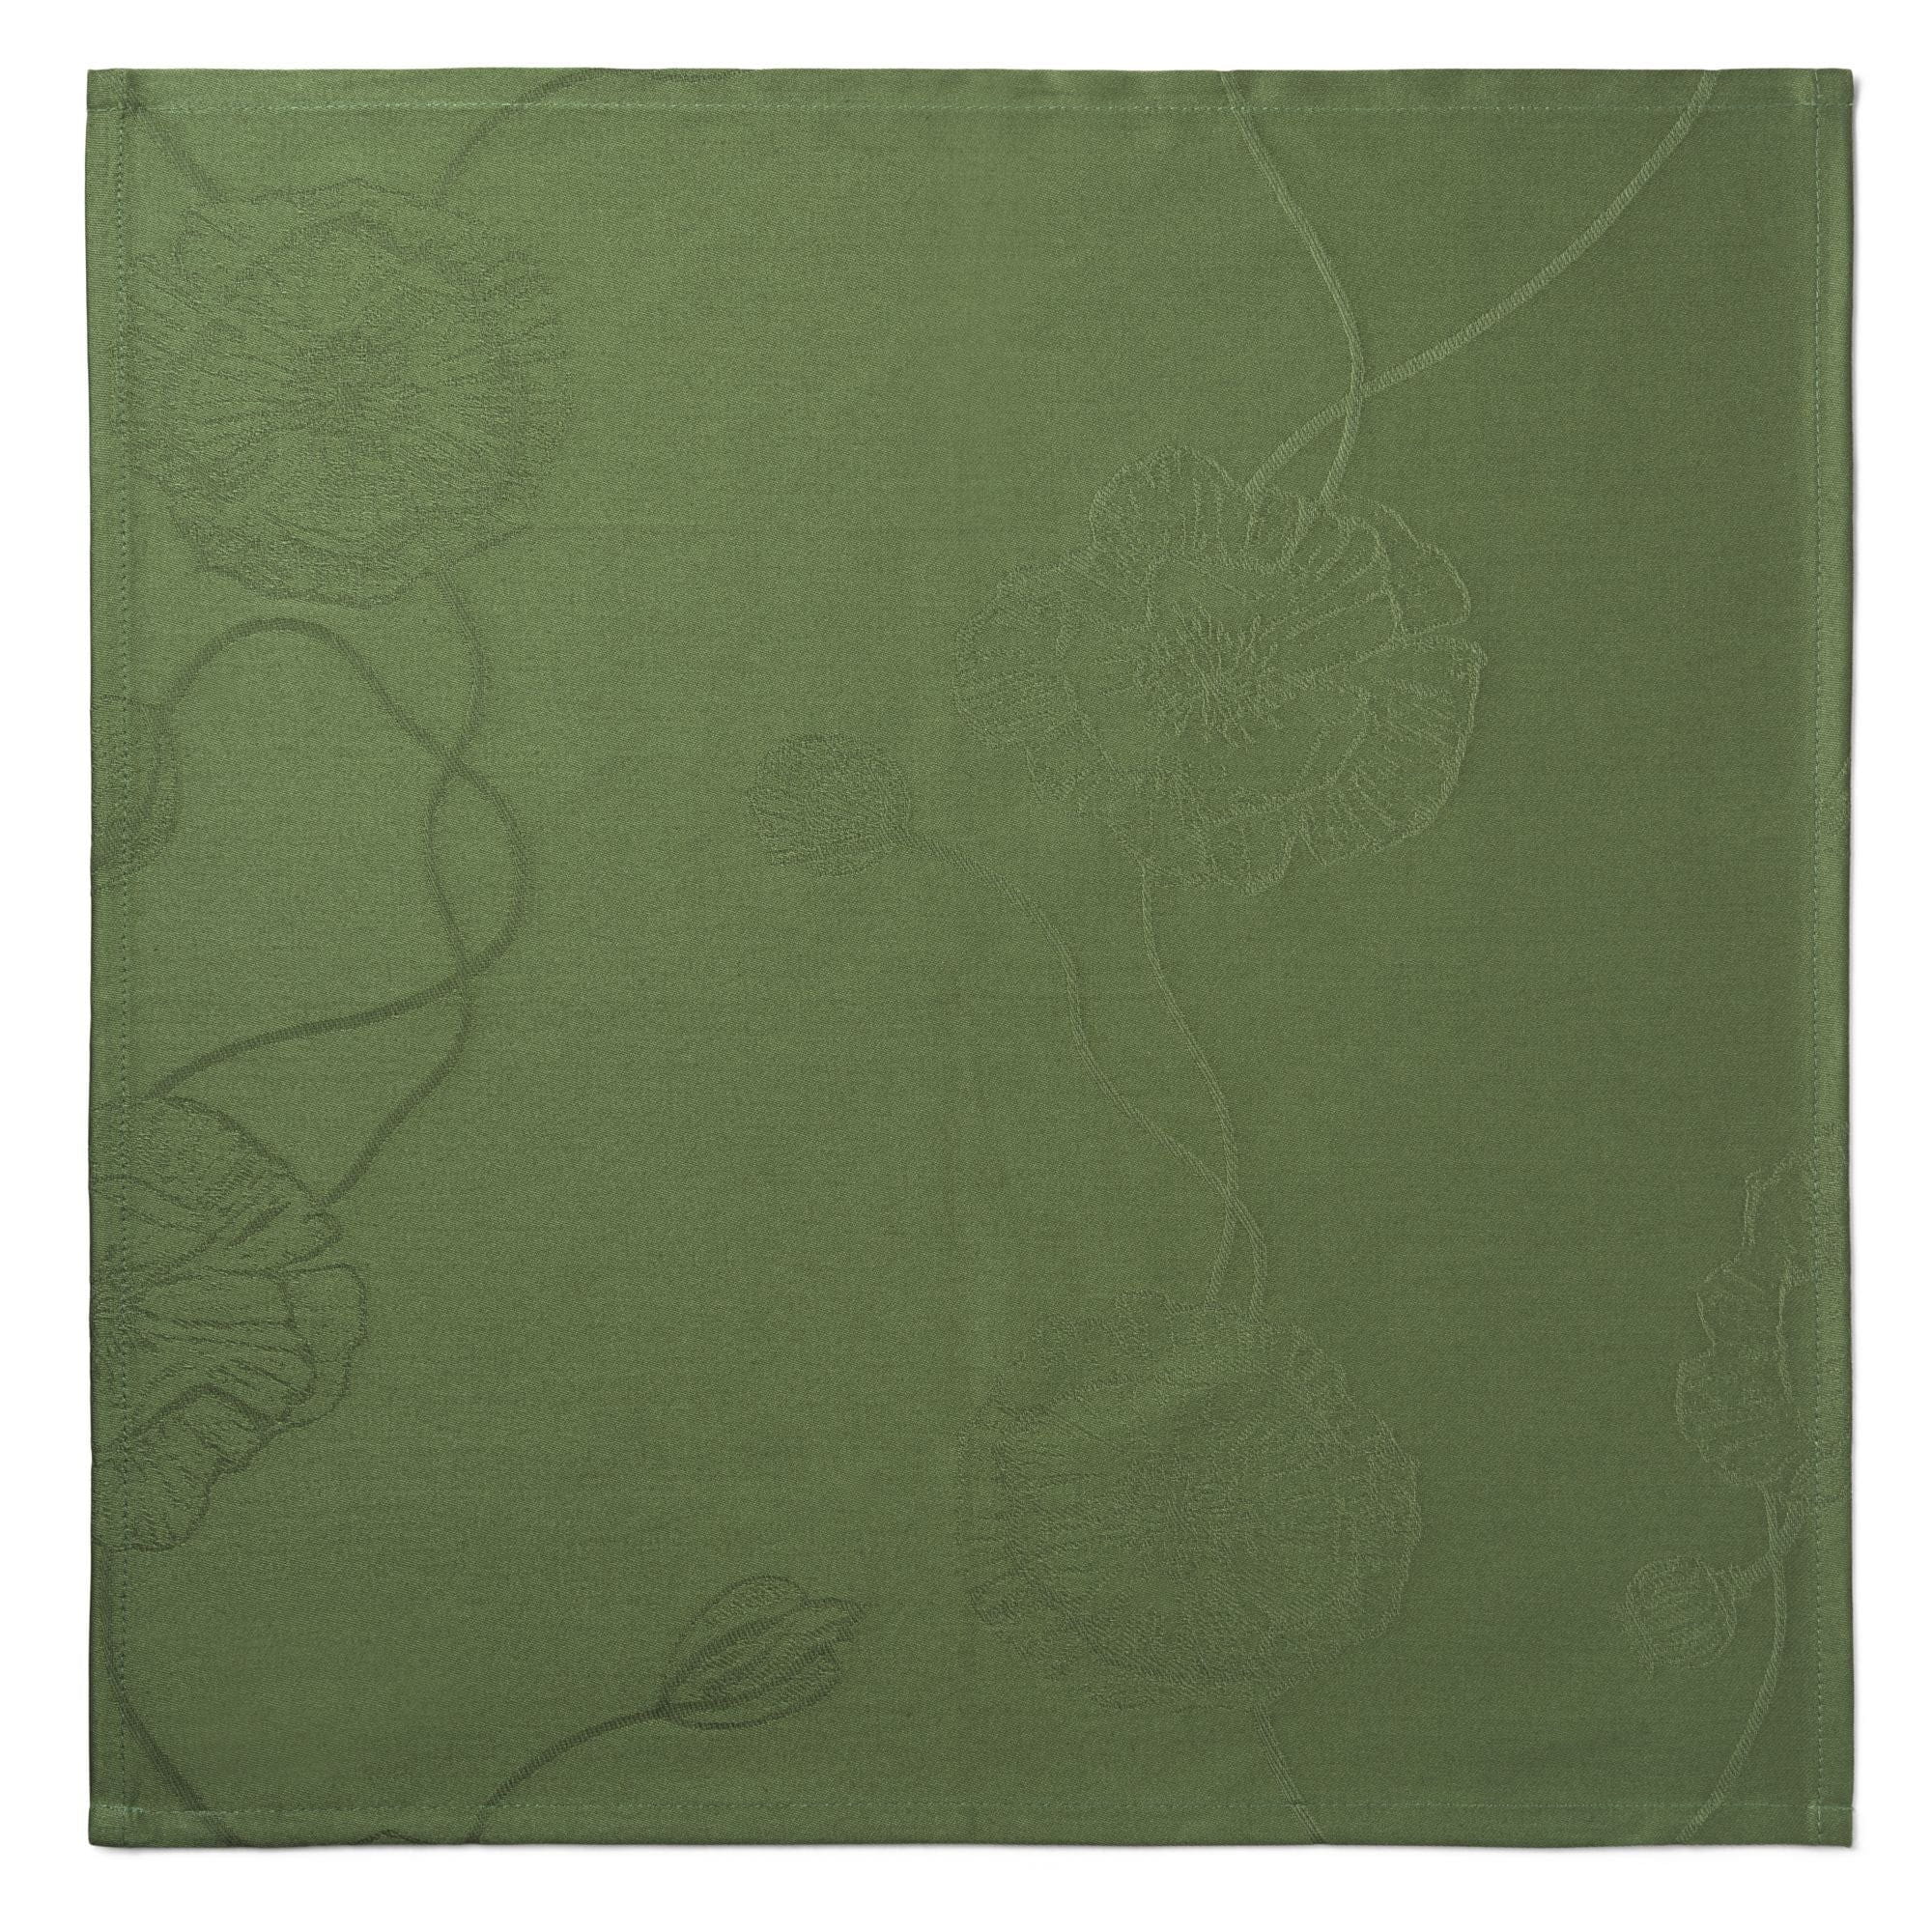 Kähler Hammershøi Poppy Cloth Napkin 4 P Cs. 45x45 Cm, Green